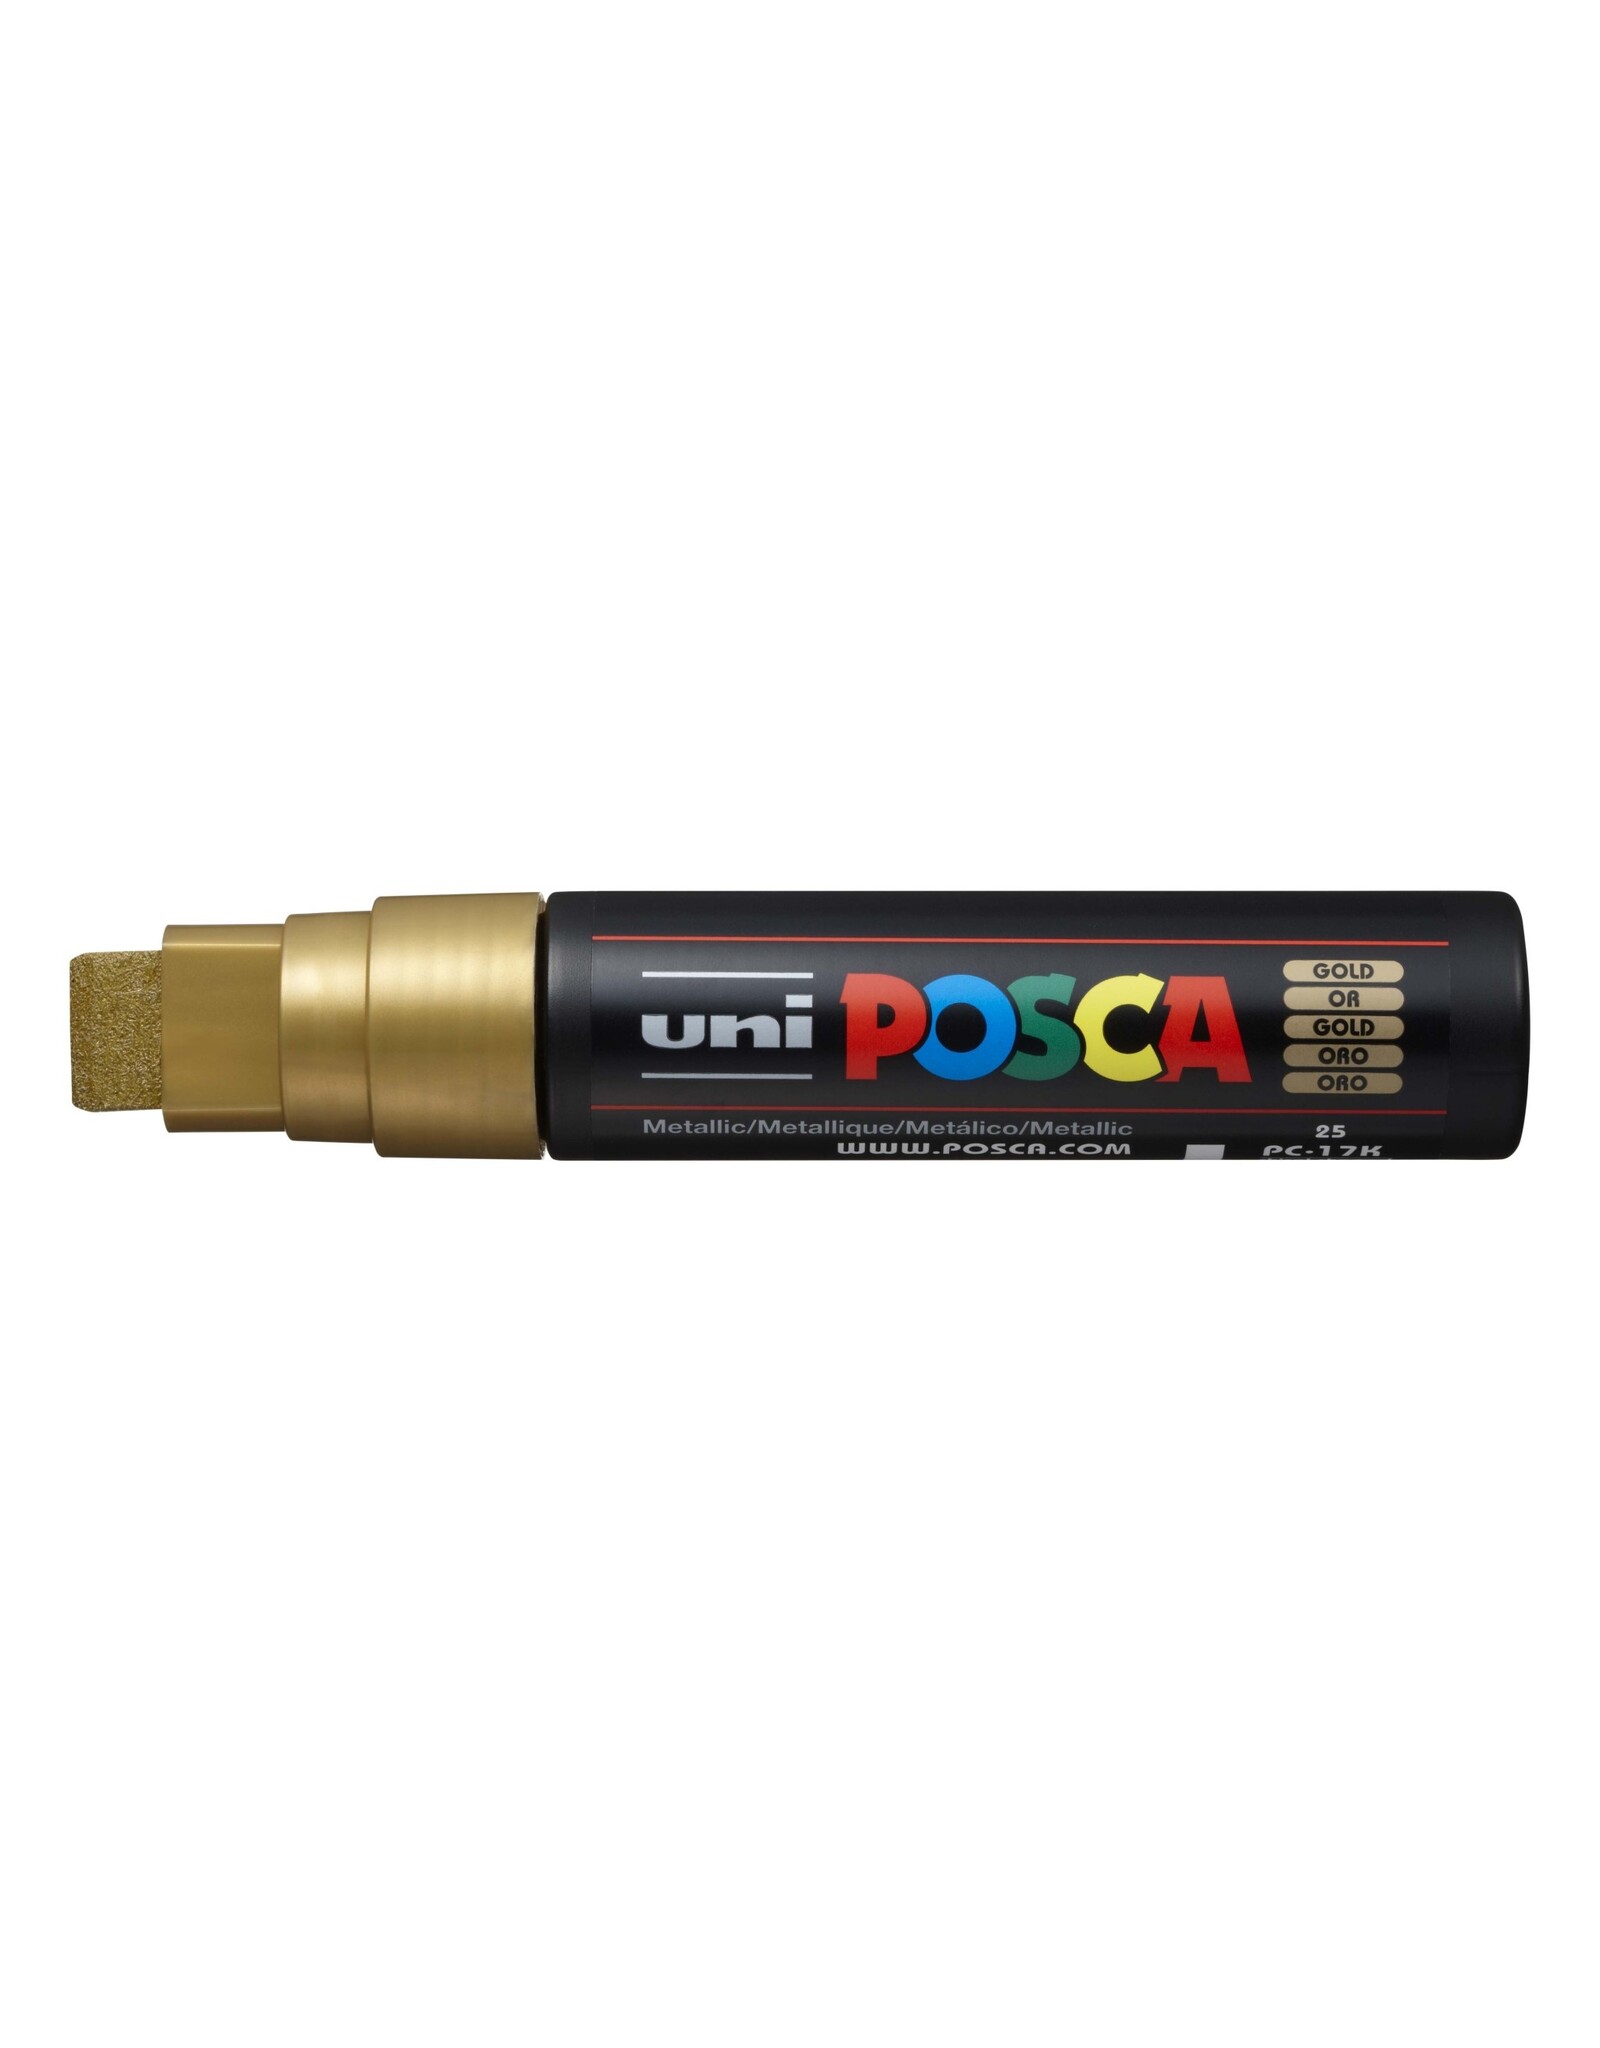 POSCA Uni POSCA Paint Marker, Extra-Broad, Gold